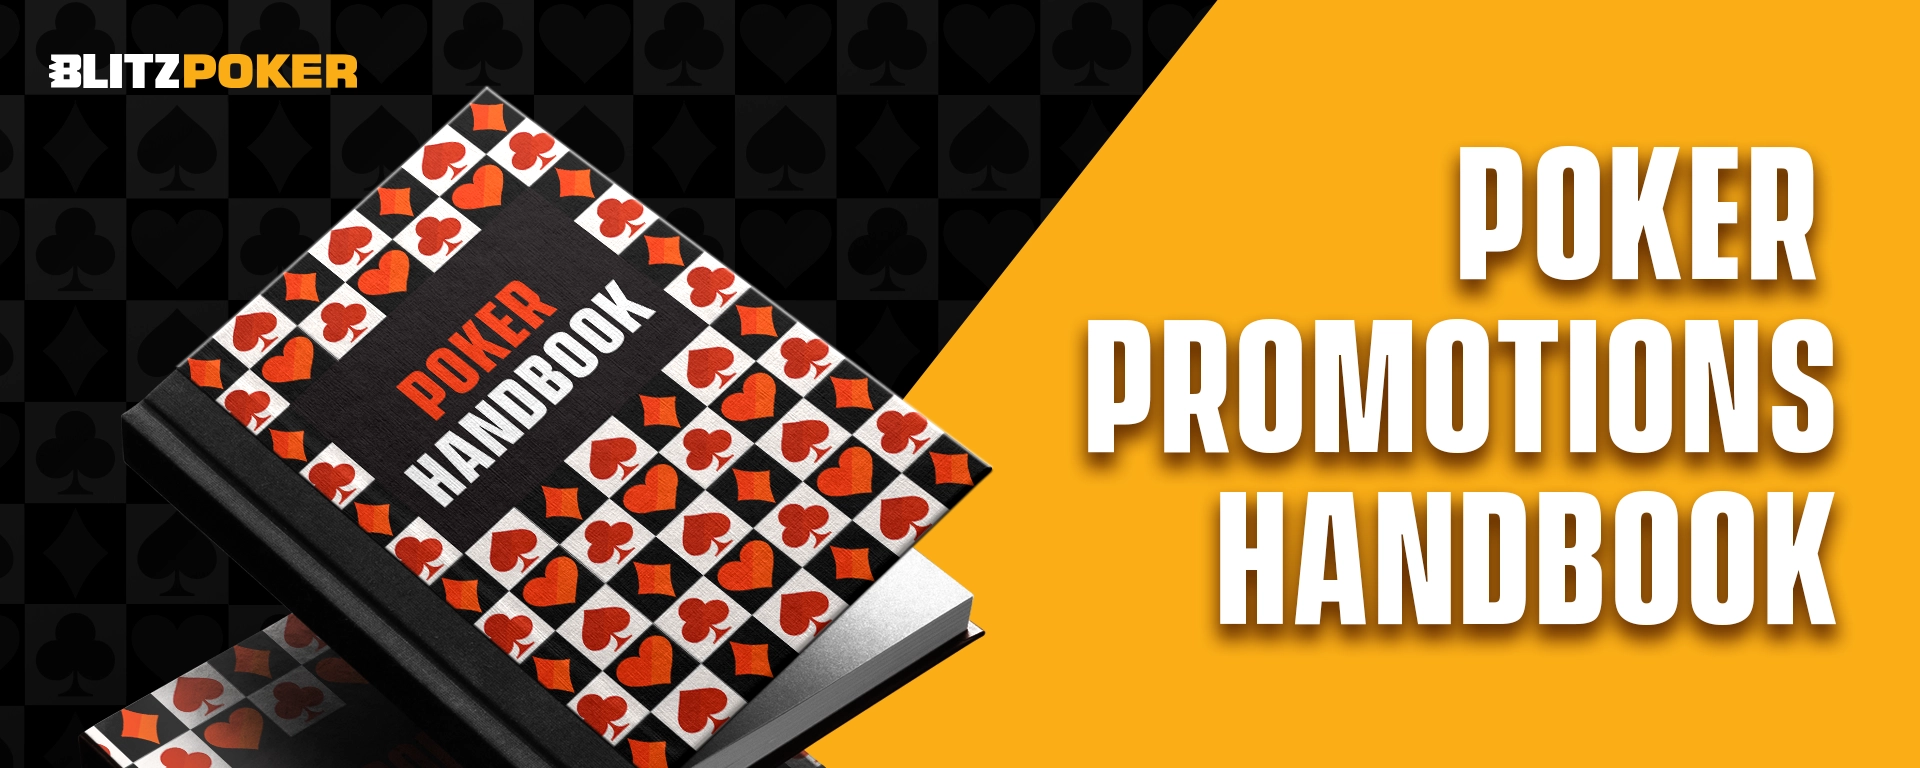 Poker Promotions Handbook